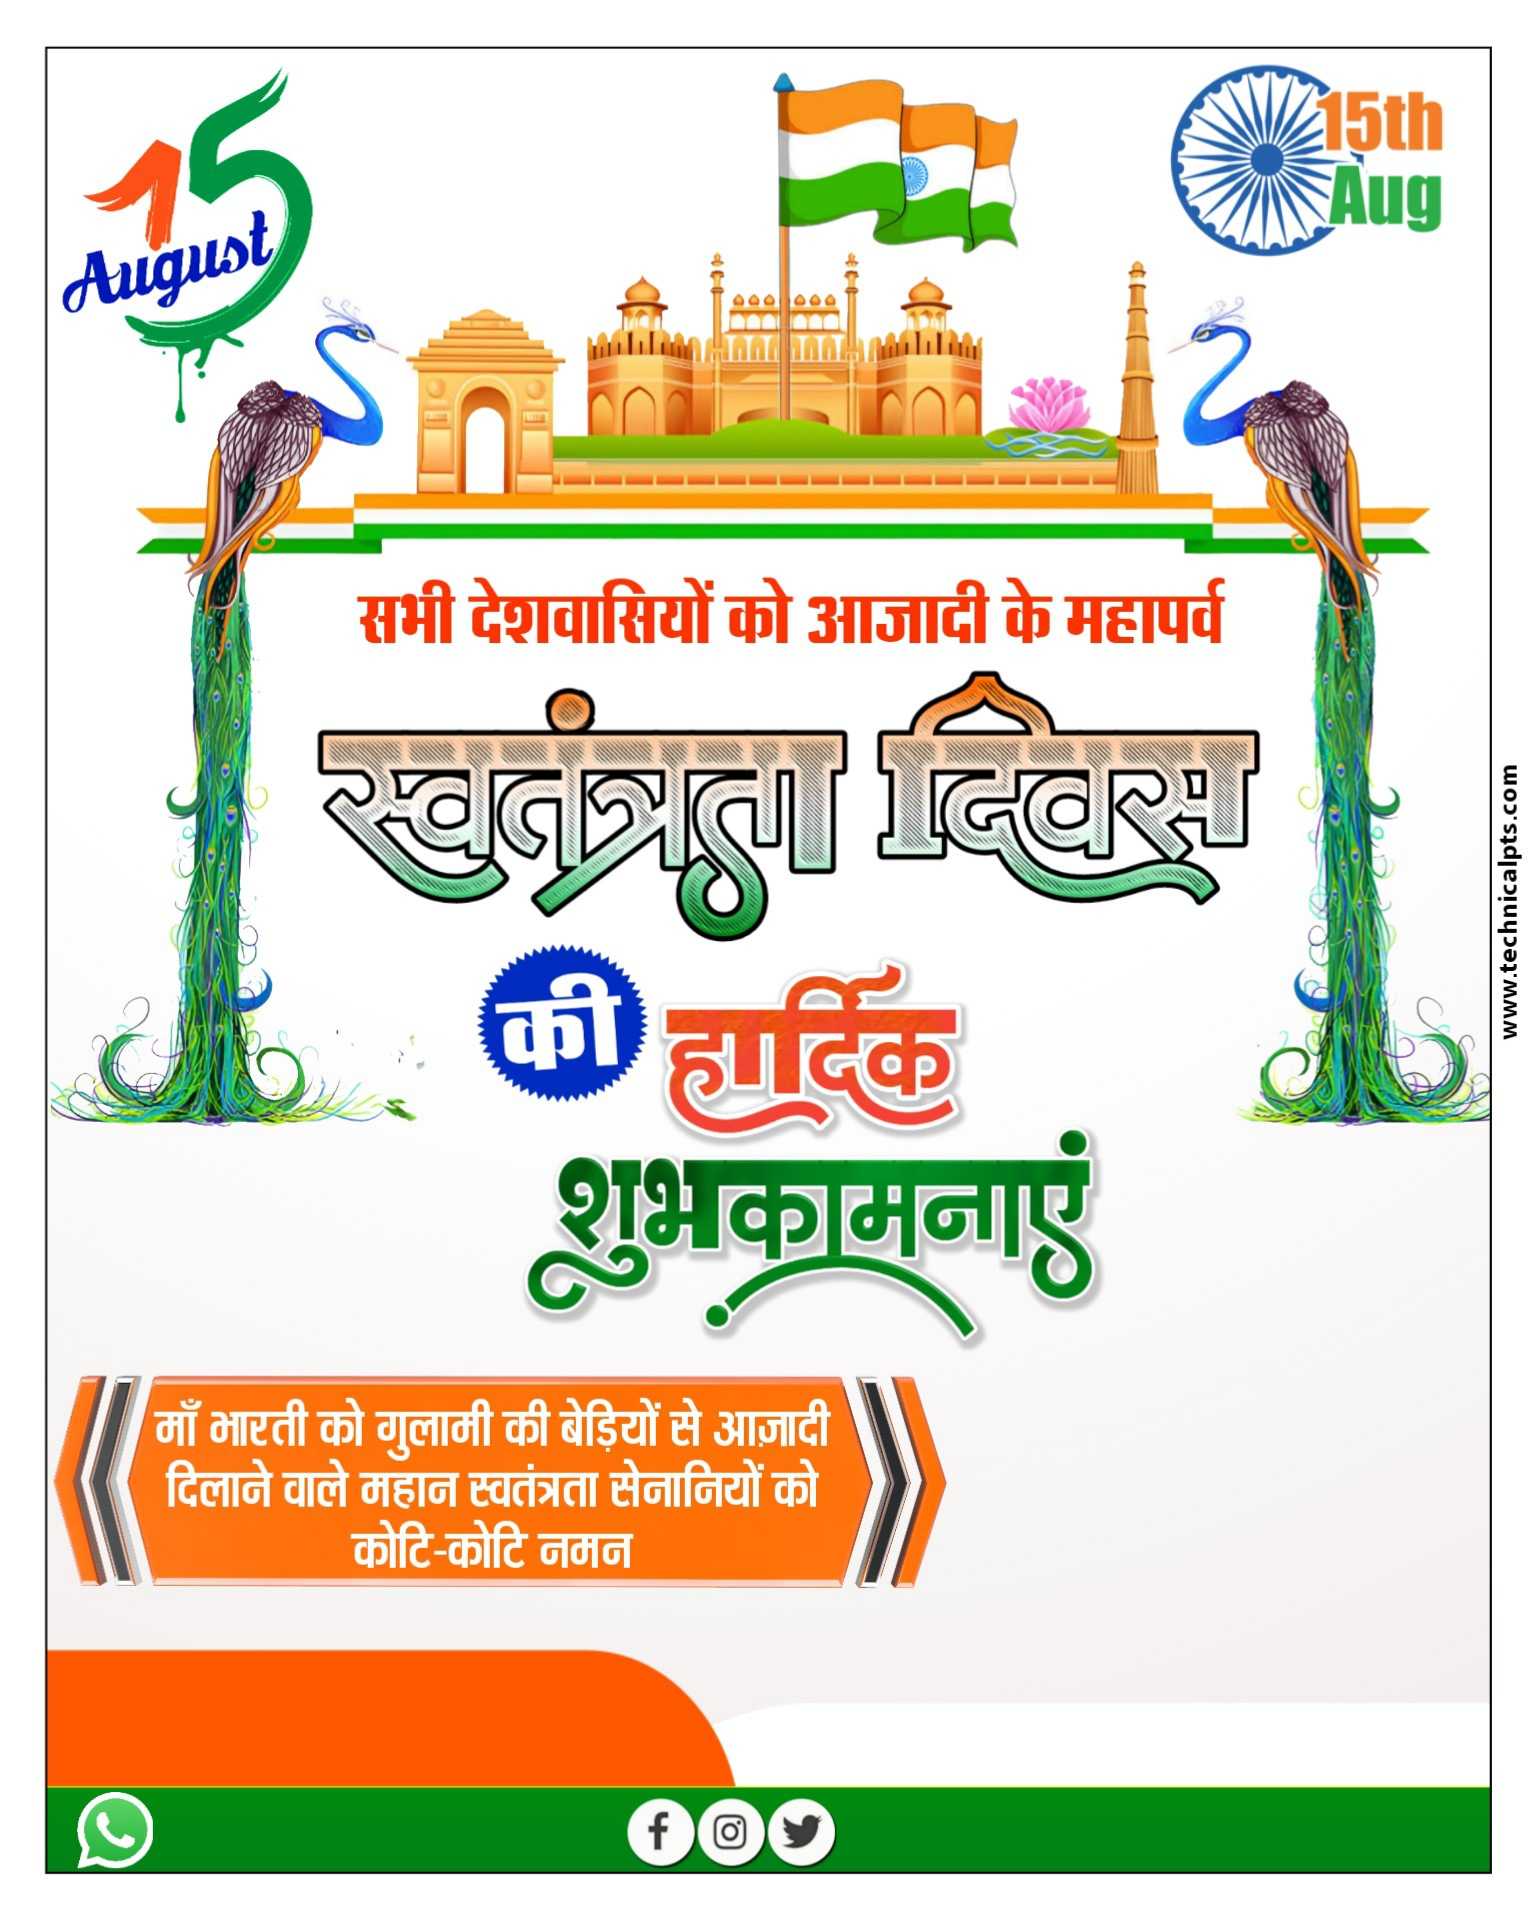 Mobile se 15 August Swatantrata Divas ka poster Kaise banaen | independence day poster design| 15 August ka poster